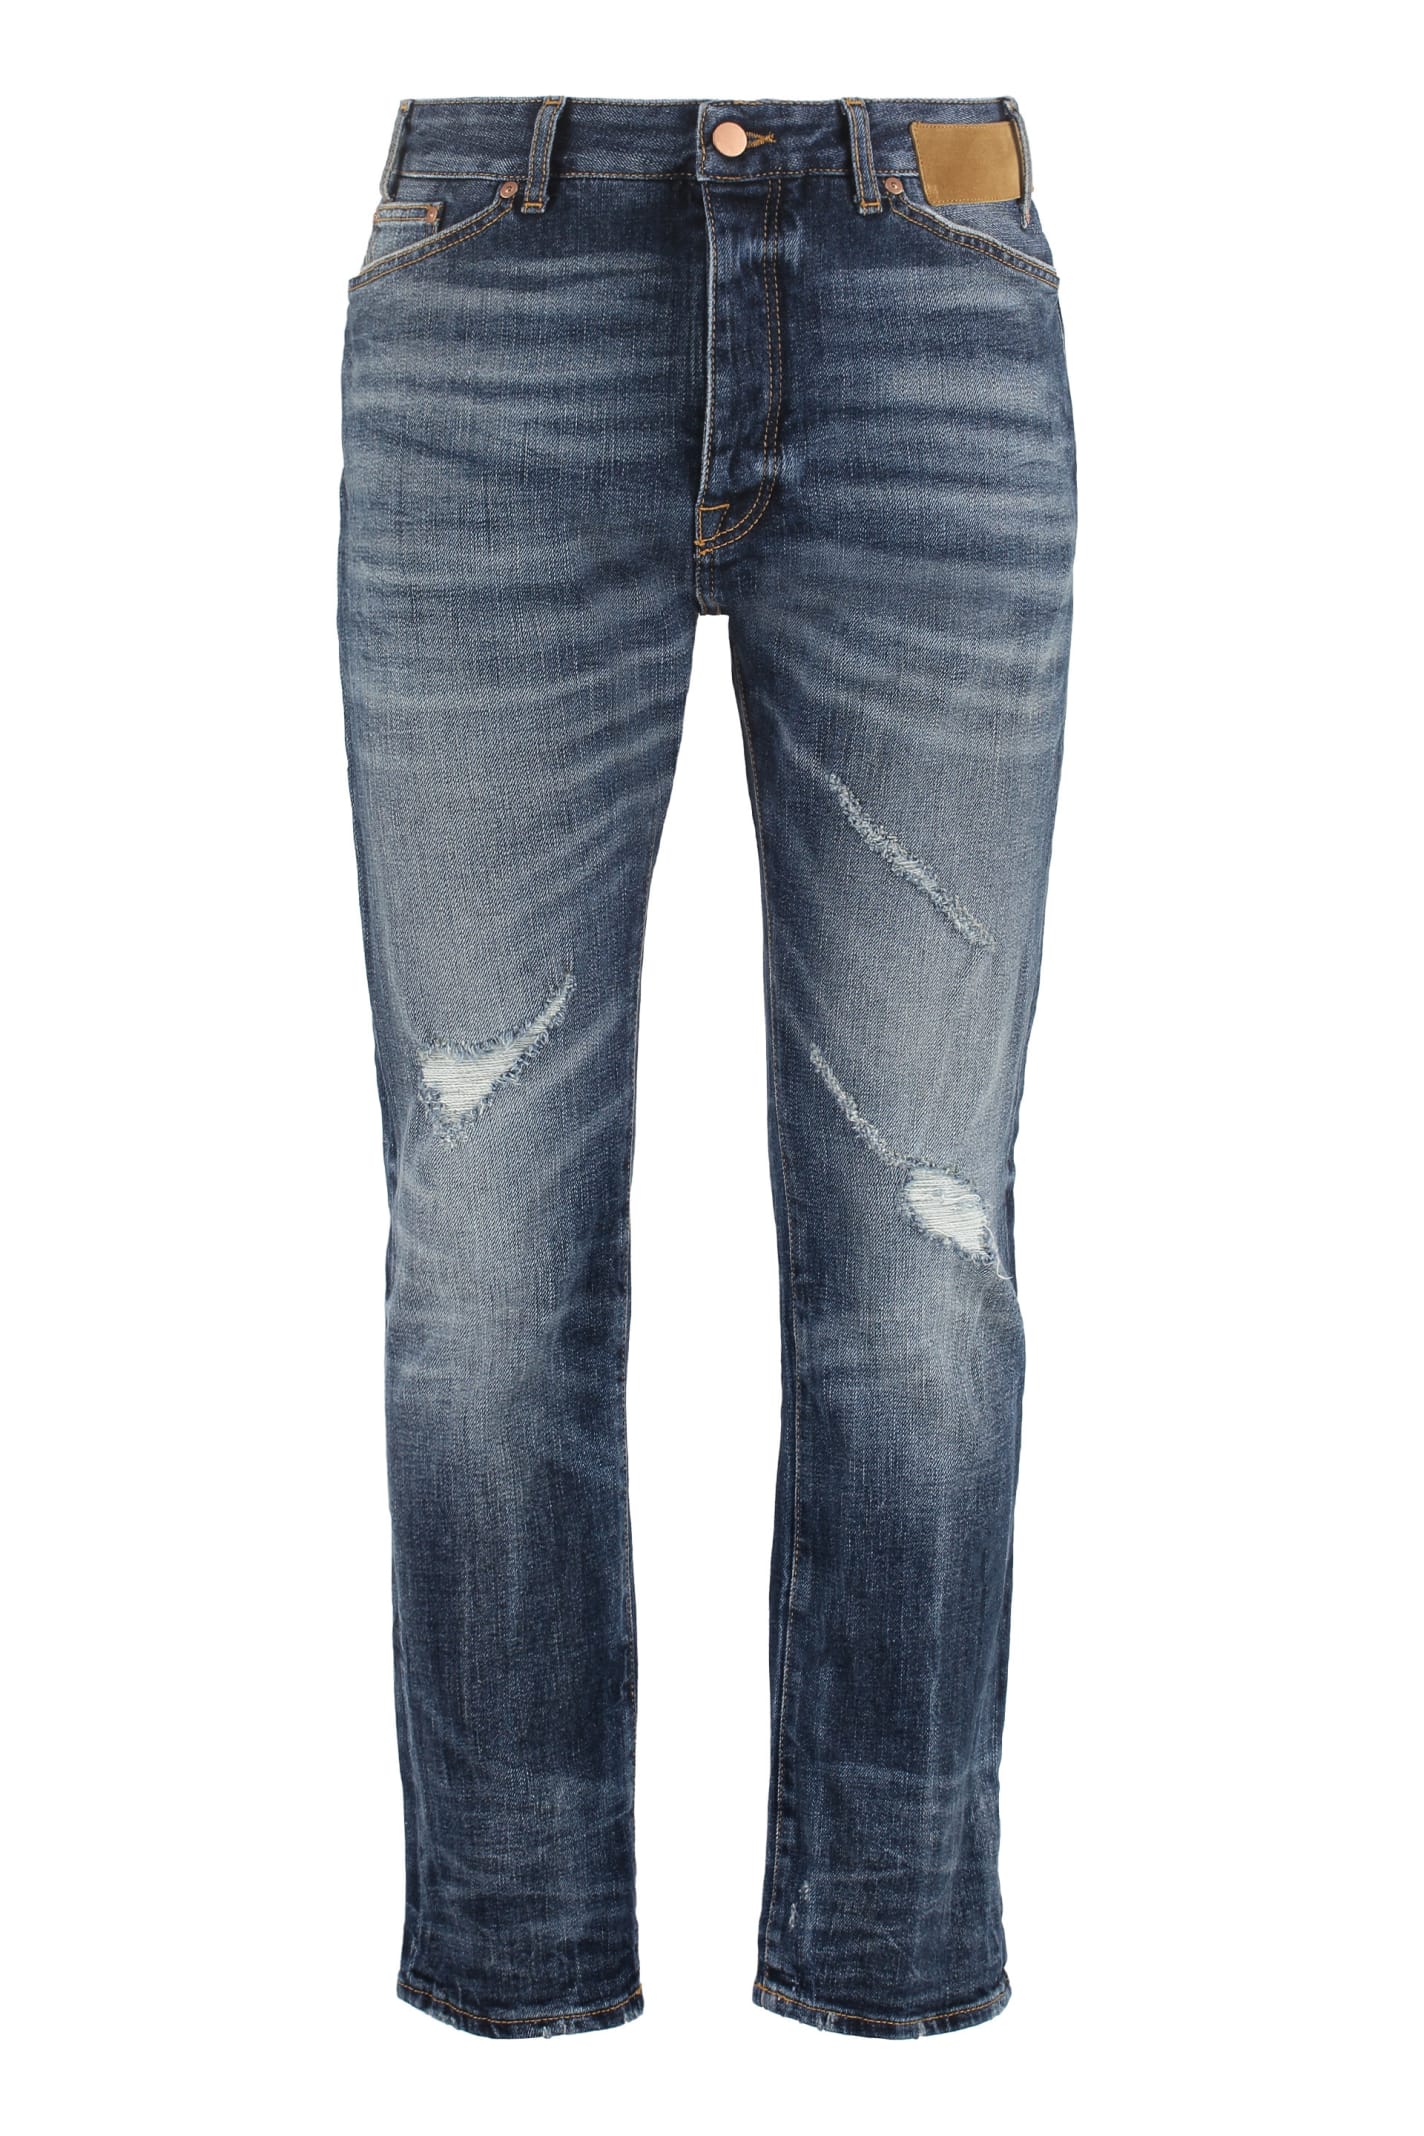 Palm Angels 5-pocket Slim Fit Jeans